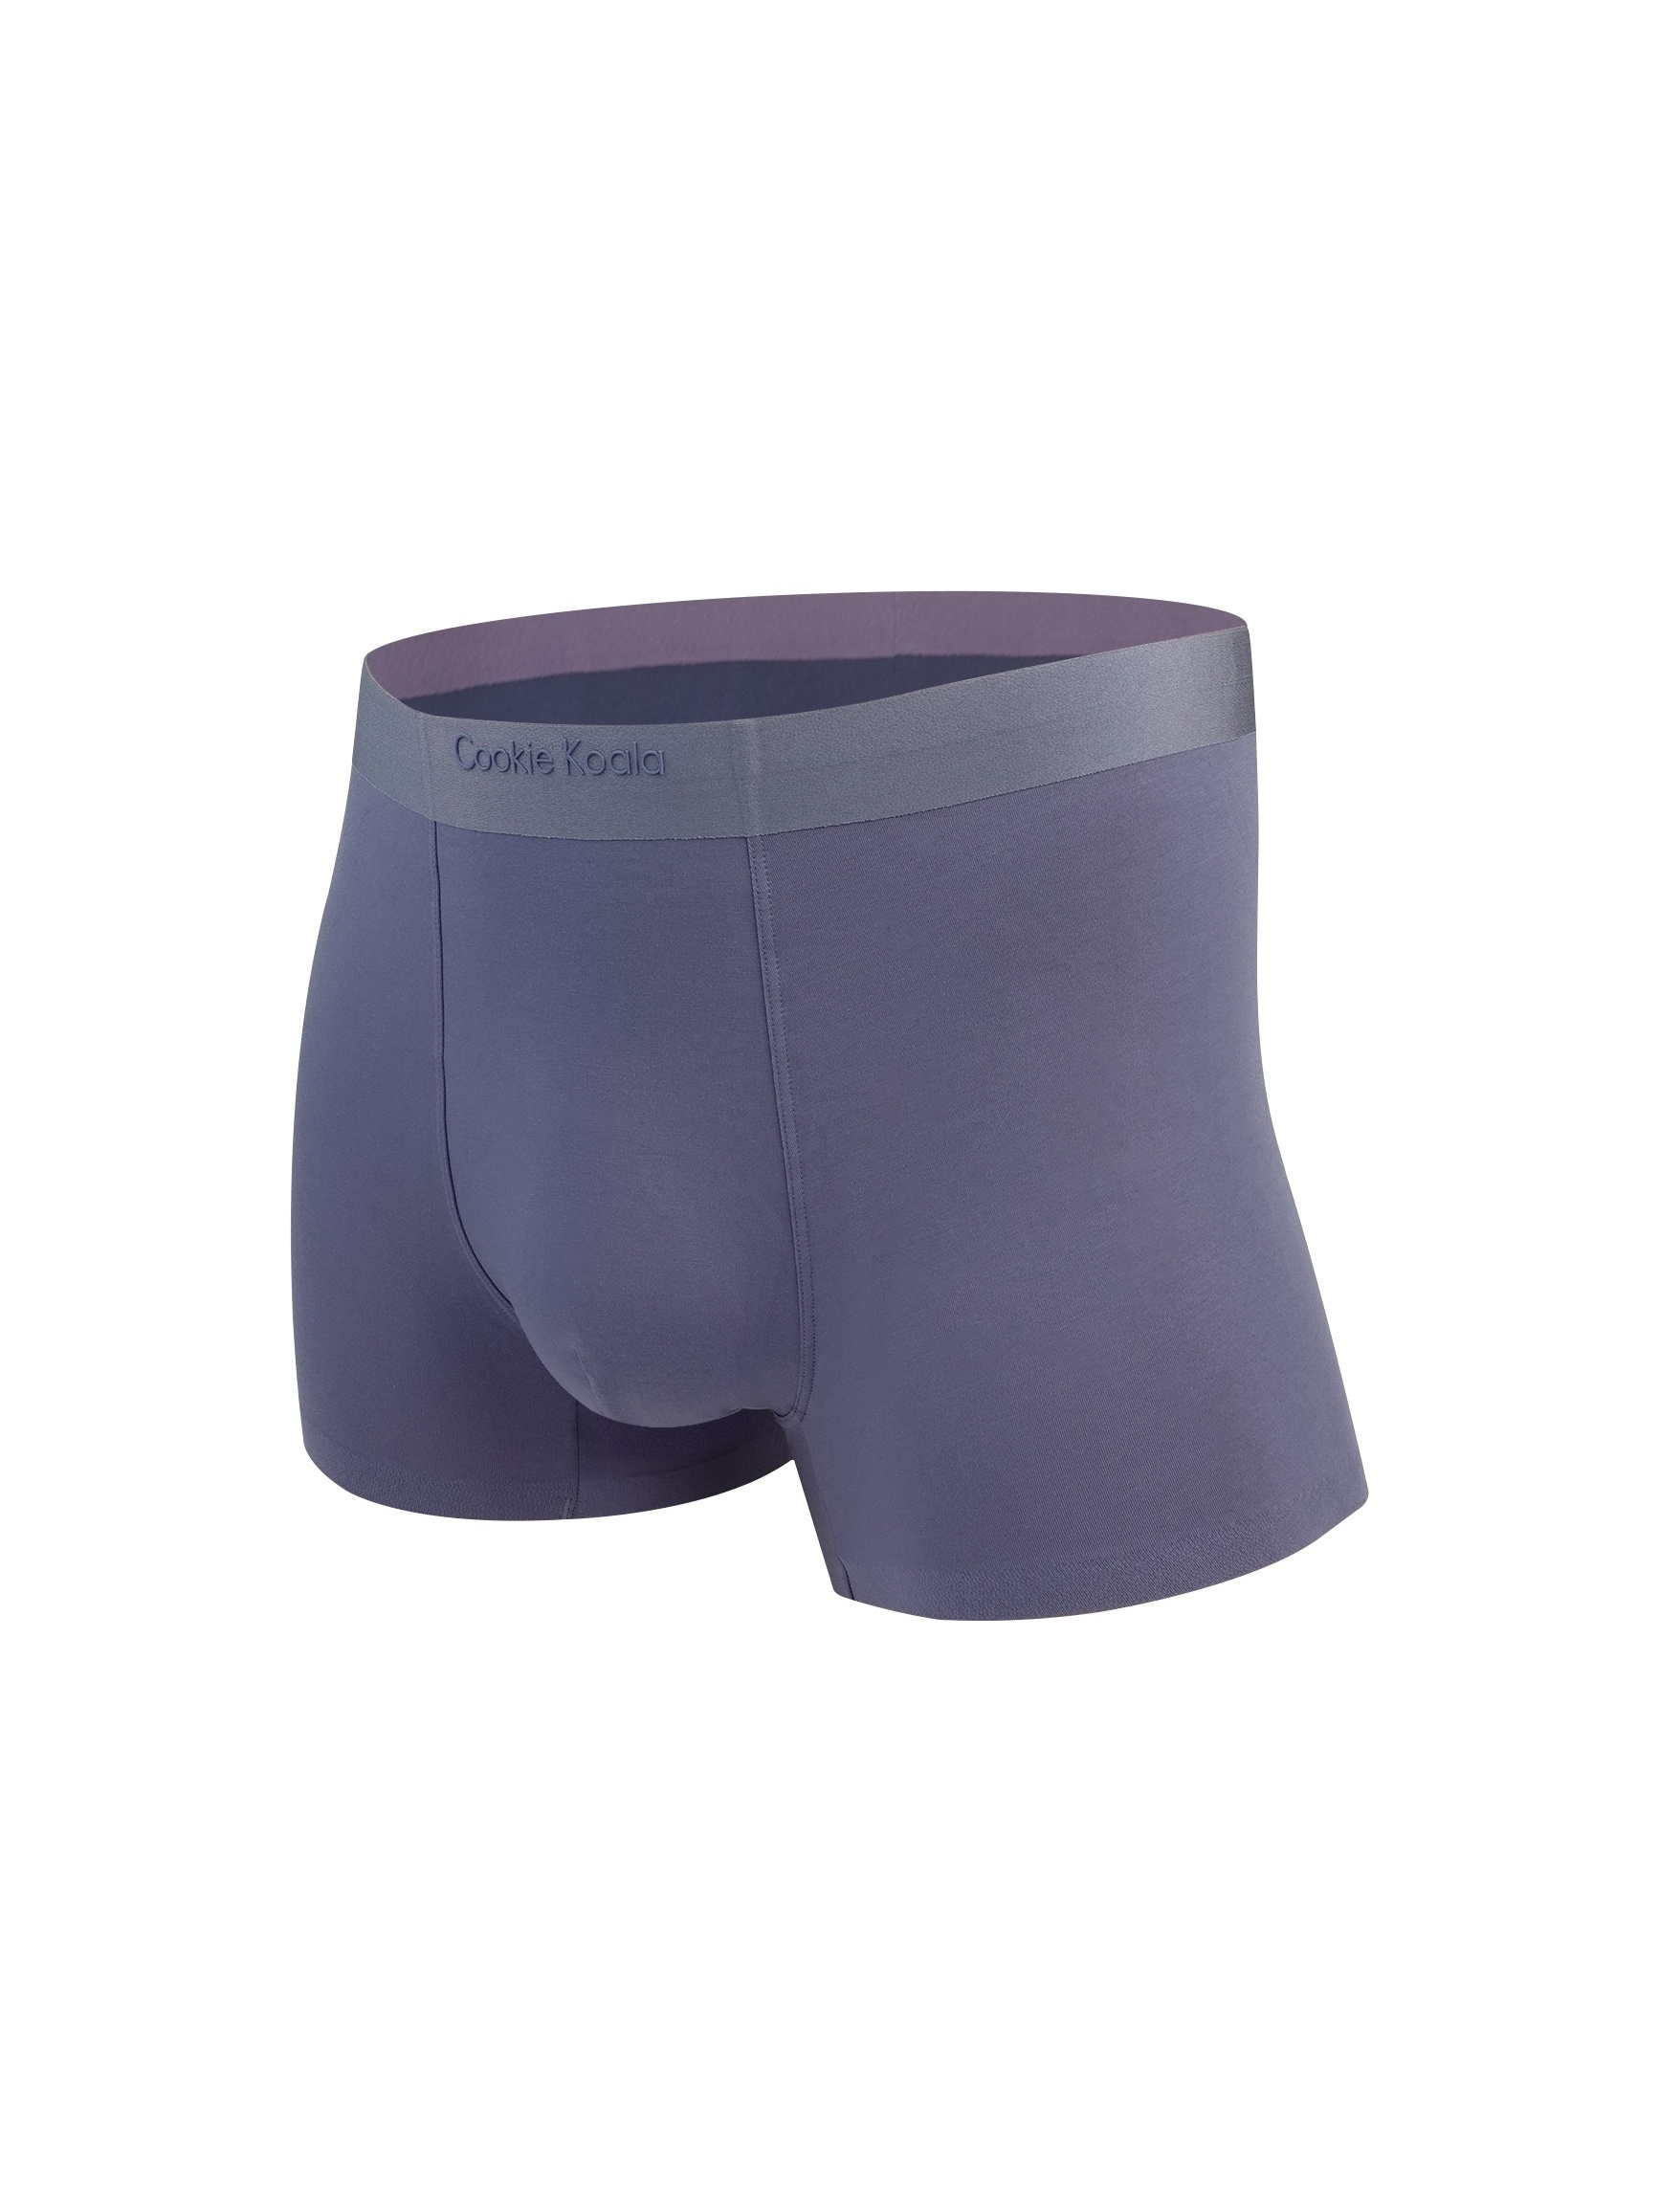 Men's Multicolor Modal Fabric Comfortable Underwear, Traceless